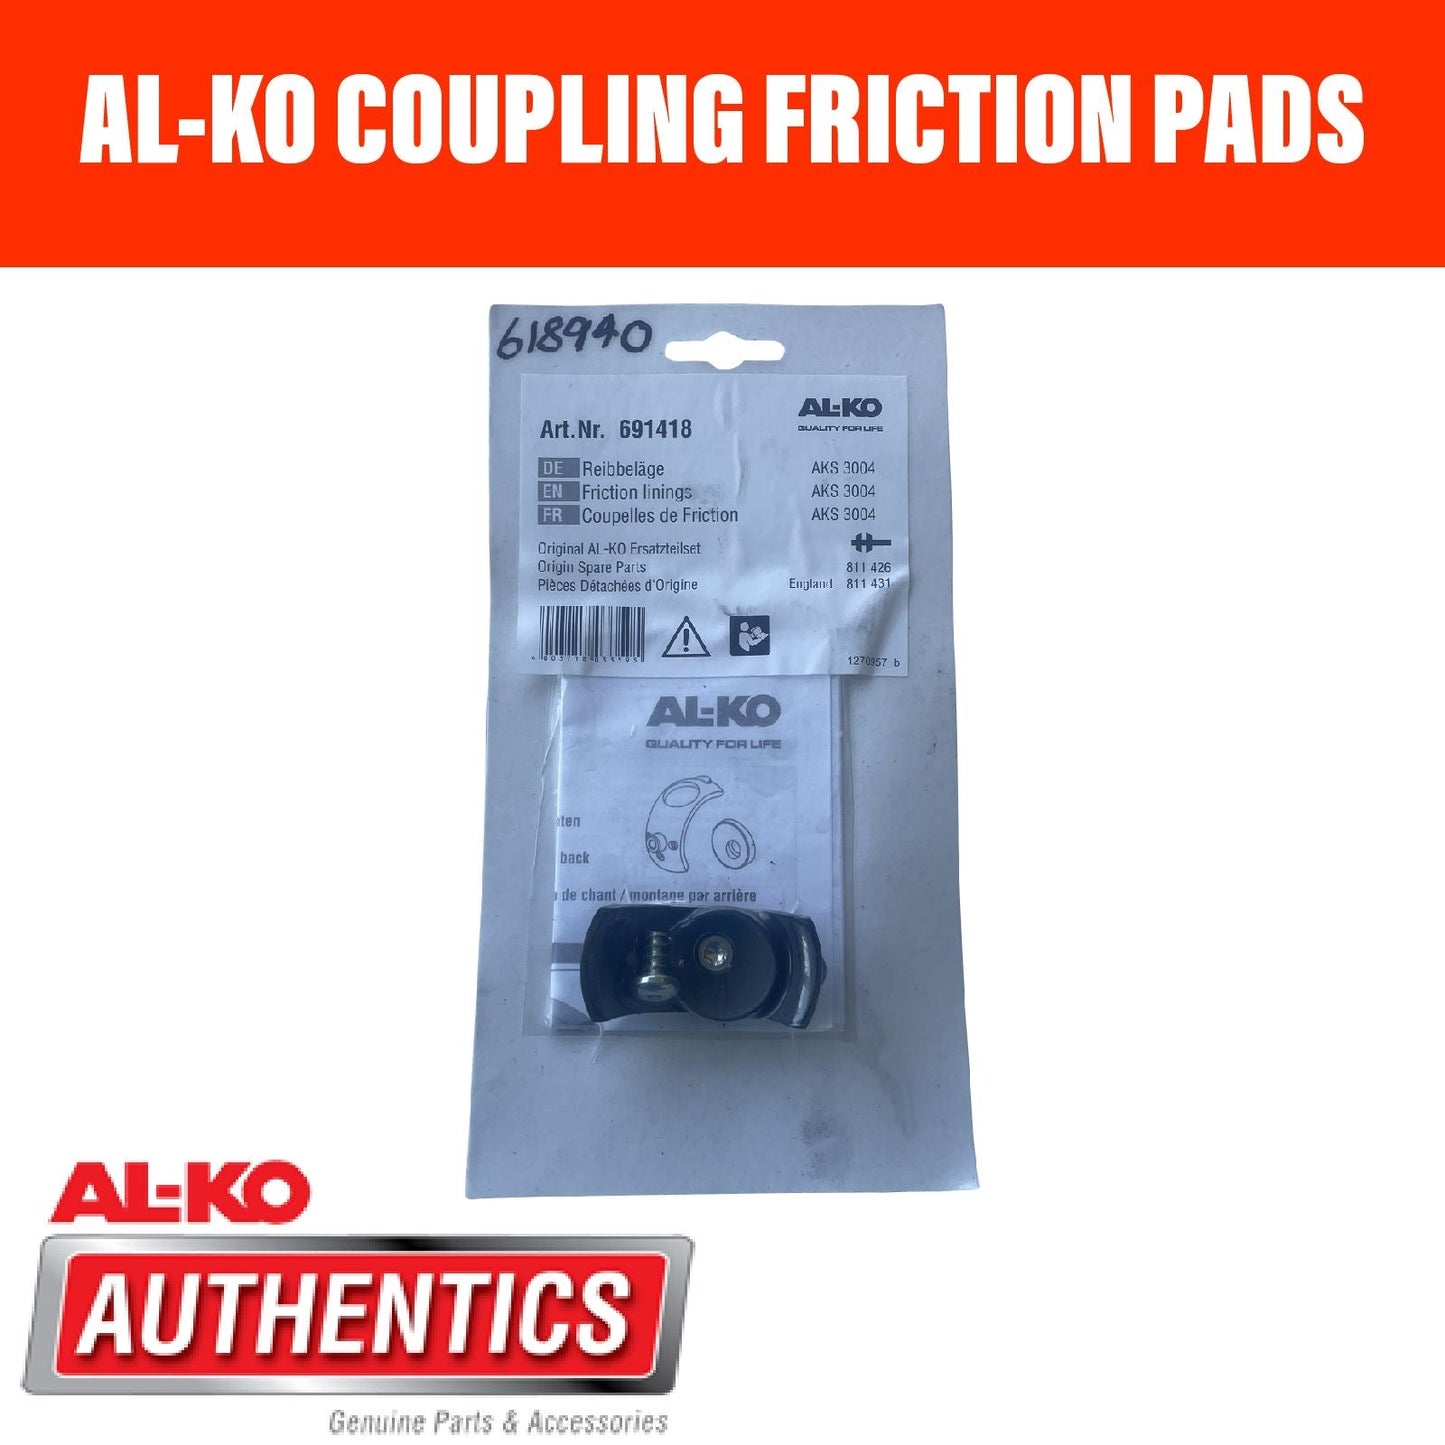 AL-KO AKS 3004 Front & Back Friction Lining Set